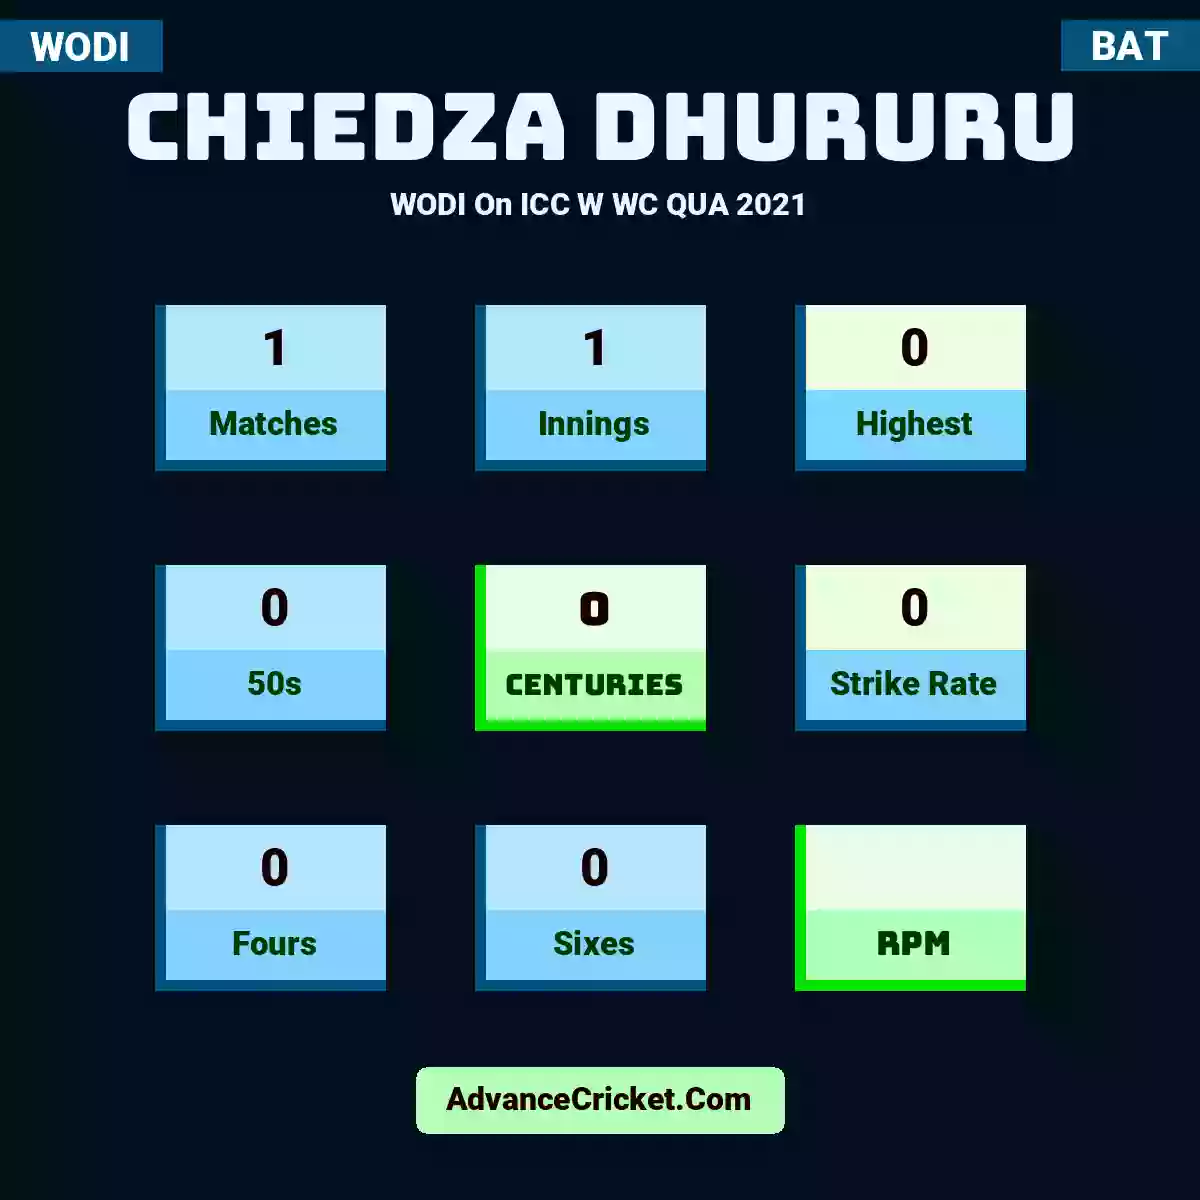 Chiedza Dhururu WODI  On ICC W WC QUA 2021, Chiedza Dhururu played 1 matches, scored 0 runs as highest, 0 half-centuries, and 0 centuries, with a strike rate of 0. C.Dhururu hit 0 fours and 0 sixes.